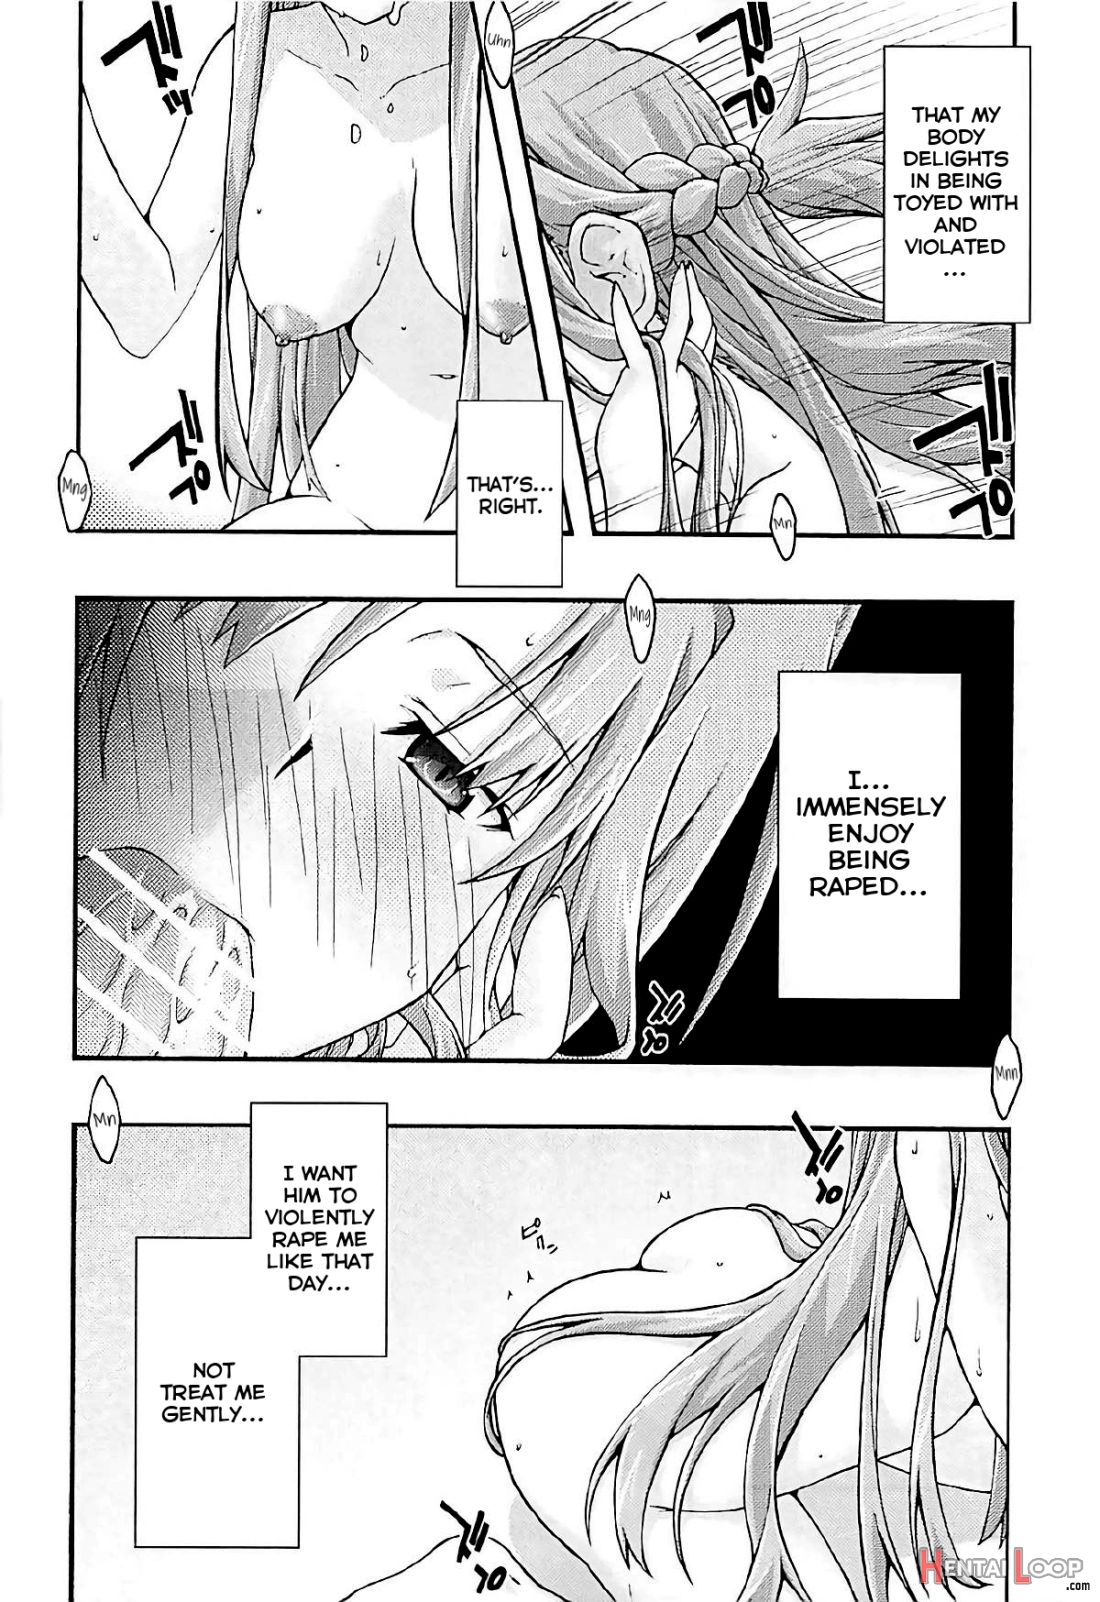 Ochiru -asuna3- page 10